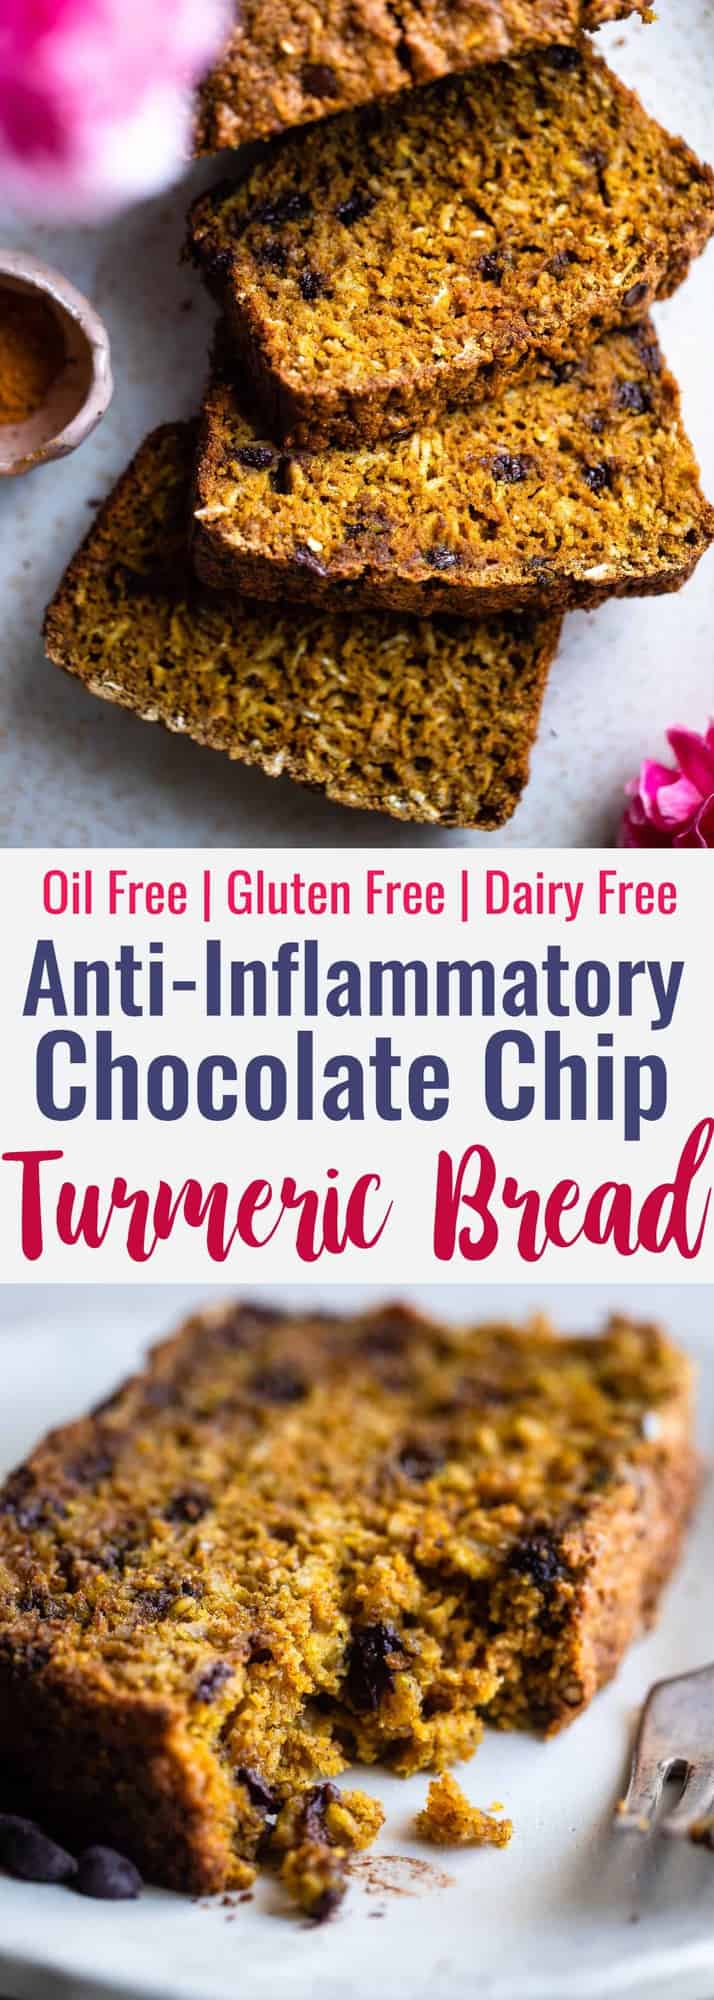 Gluten Free Turmeric Chocolate Chip Bread - This healthy turmeric oat flour bread is spicy-sweet and has melty chocolate chips! A gluten free and dairy free breakfast or snack that is anti-inflammatory! | #Foodfaithfitness | #dairyfree #glutenfree #turmeric #nutfree #anti-inflammtory